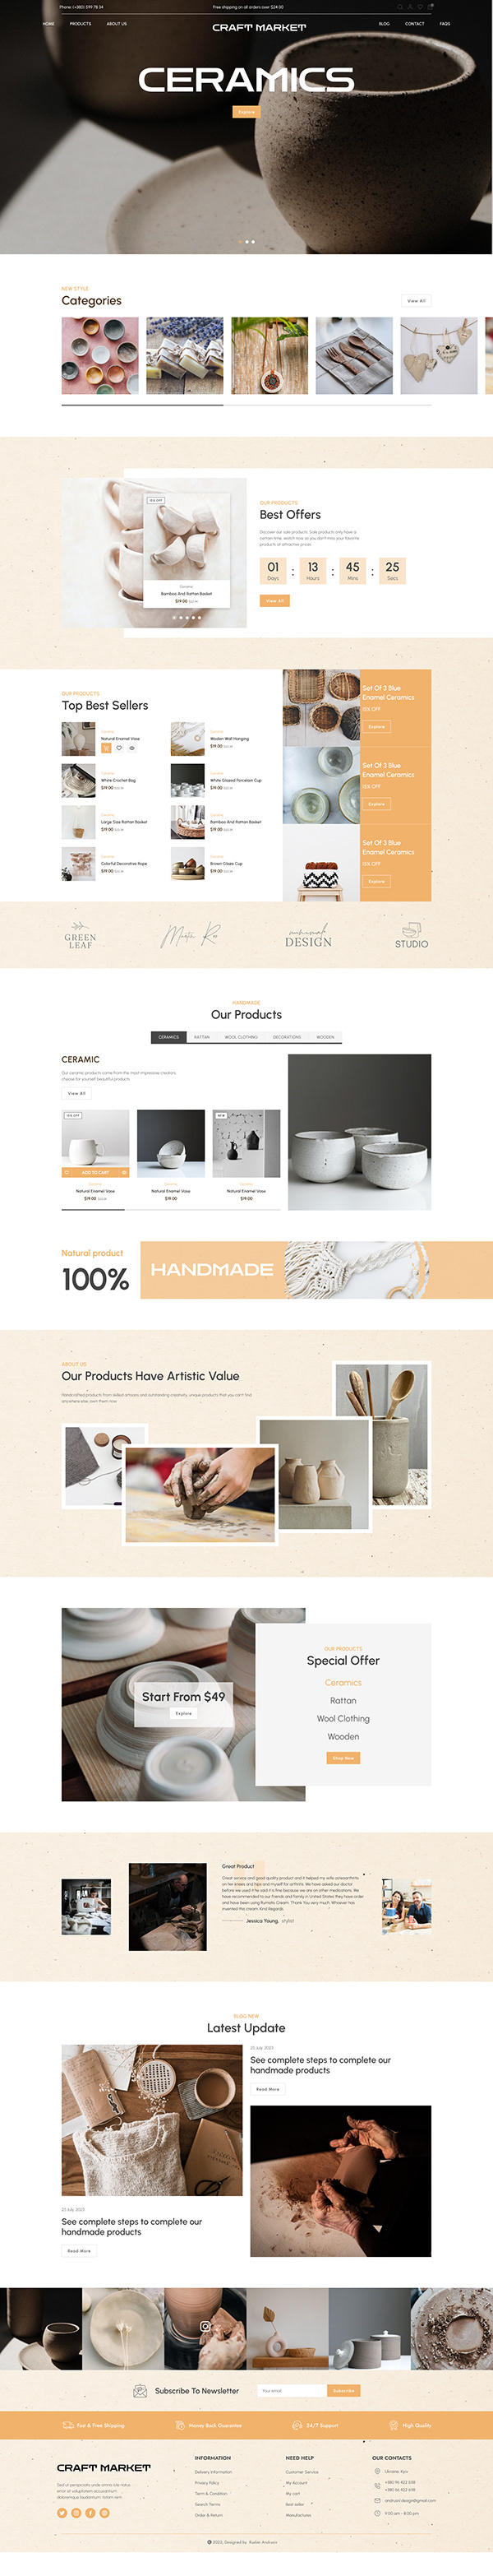 Design of the website of the handmade market!